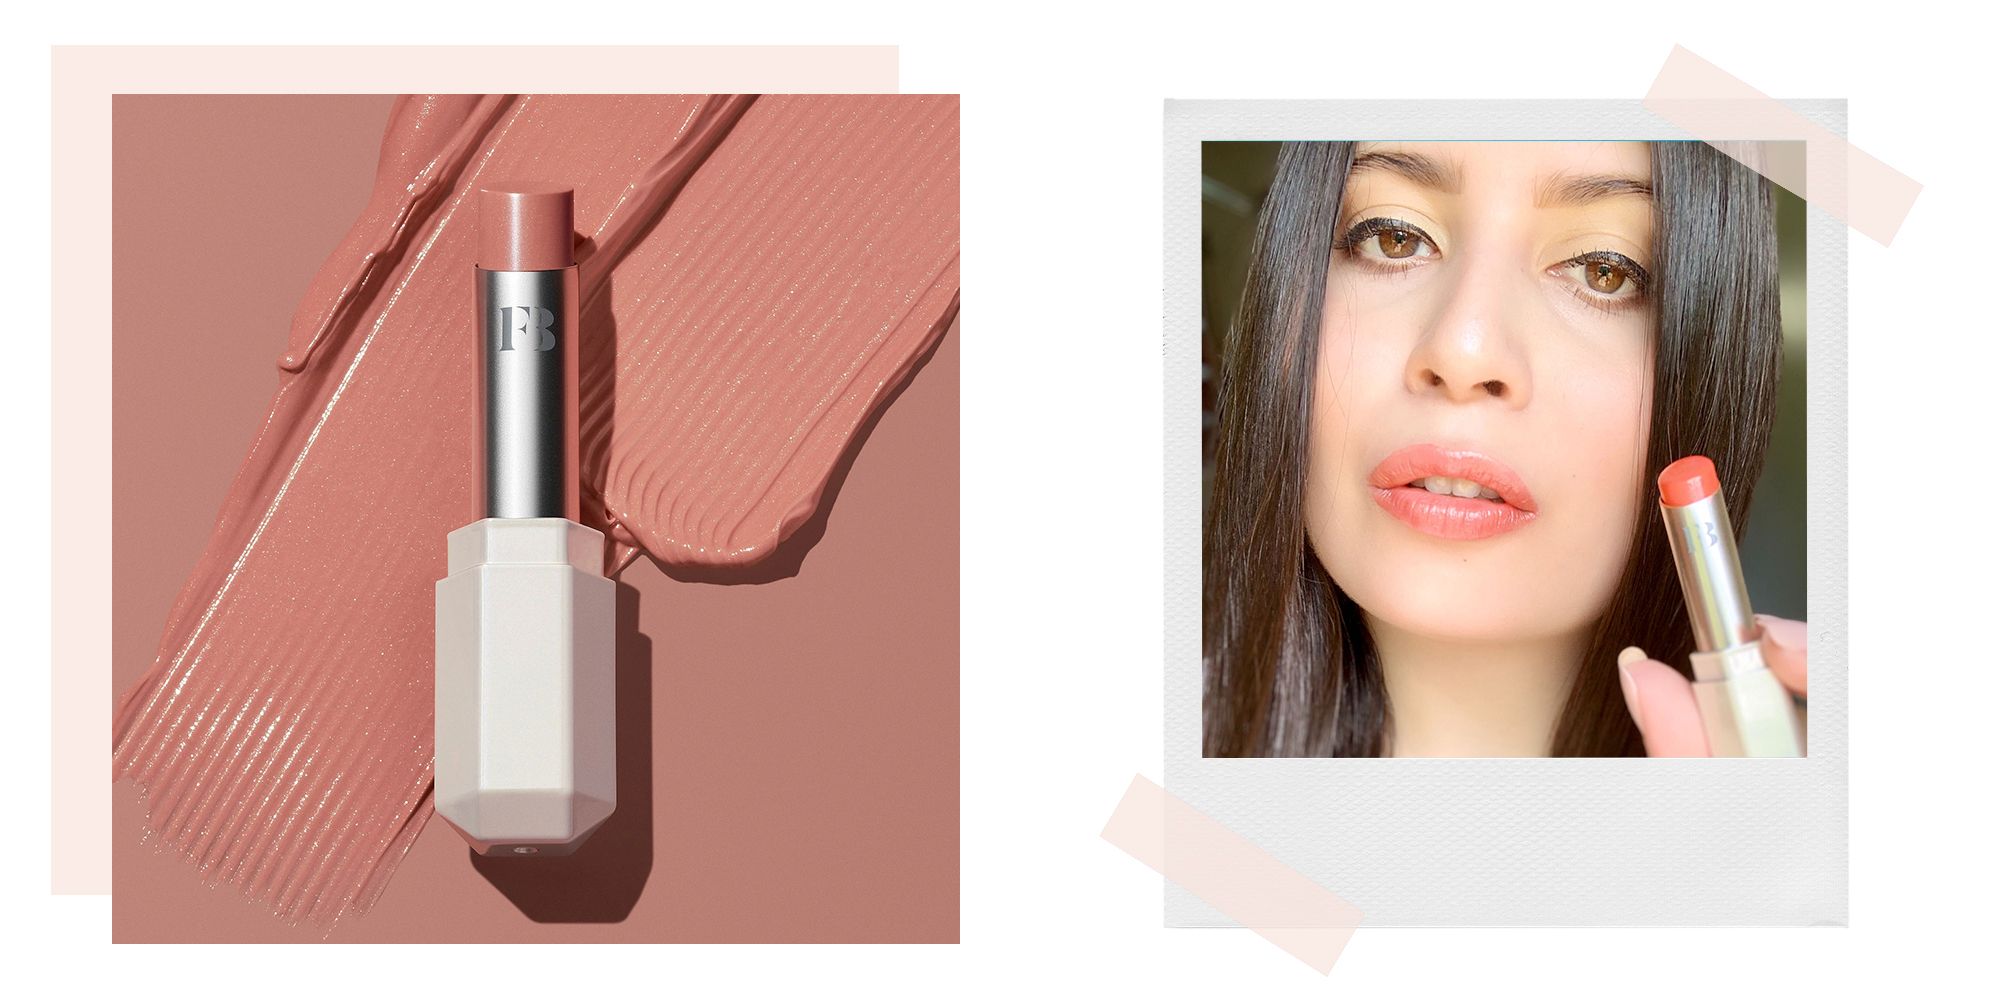 Fenty Beauty Sheer Lipstick Review 2020 - Best Sheer Lipstick